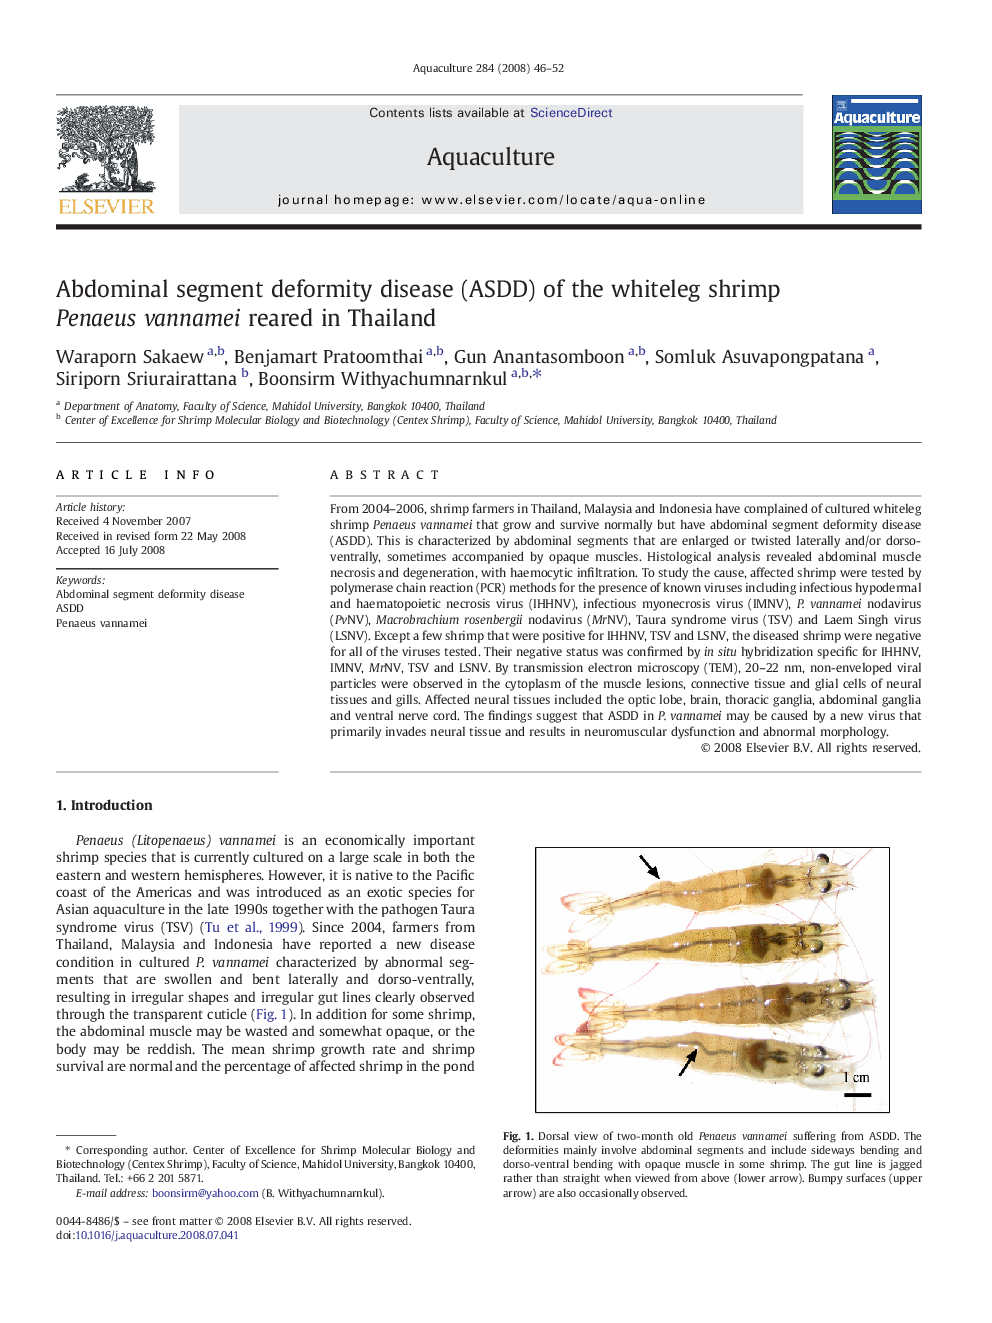 Abdominal segment deformity disease (ASDD) of the whiteleg shrimp Penaeus vannamei reared in Thailand